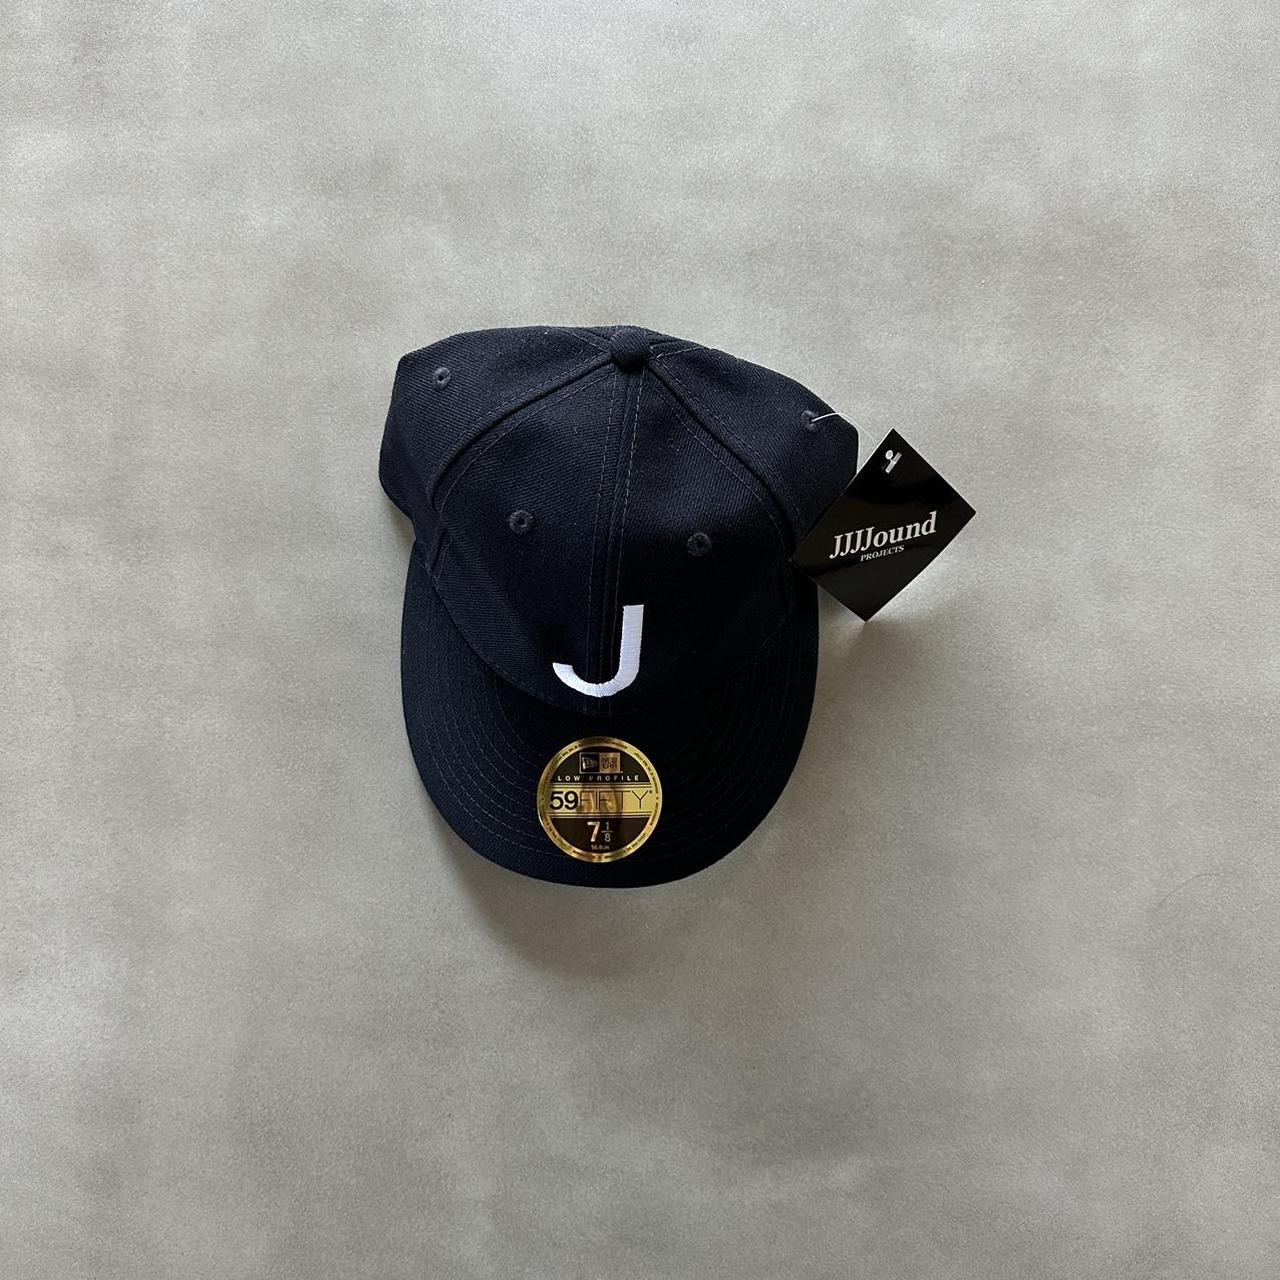 Jjjjound x New Era Fitted Low Profile Hat Sz 7-1/8 -...